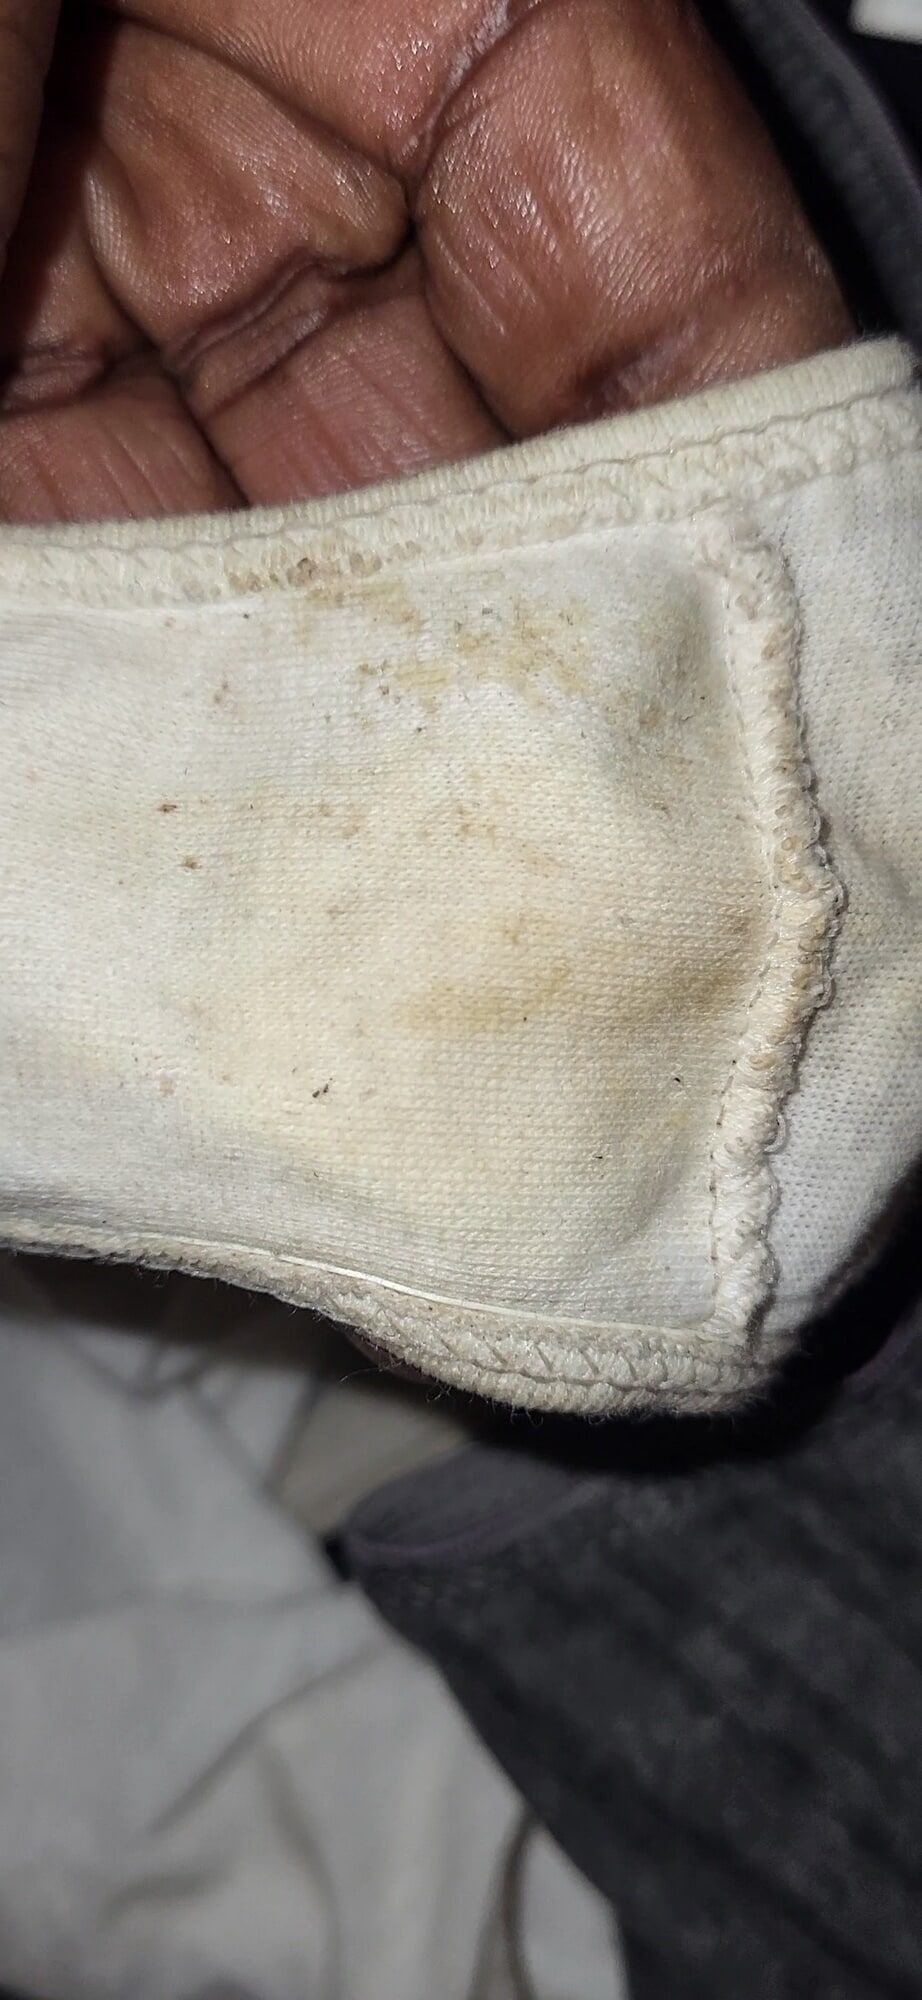 Wife's Dirty Panties Laundry Bag #9